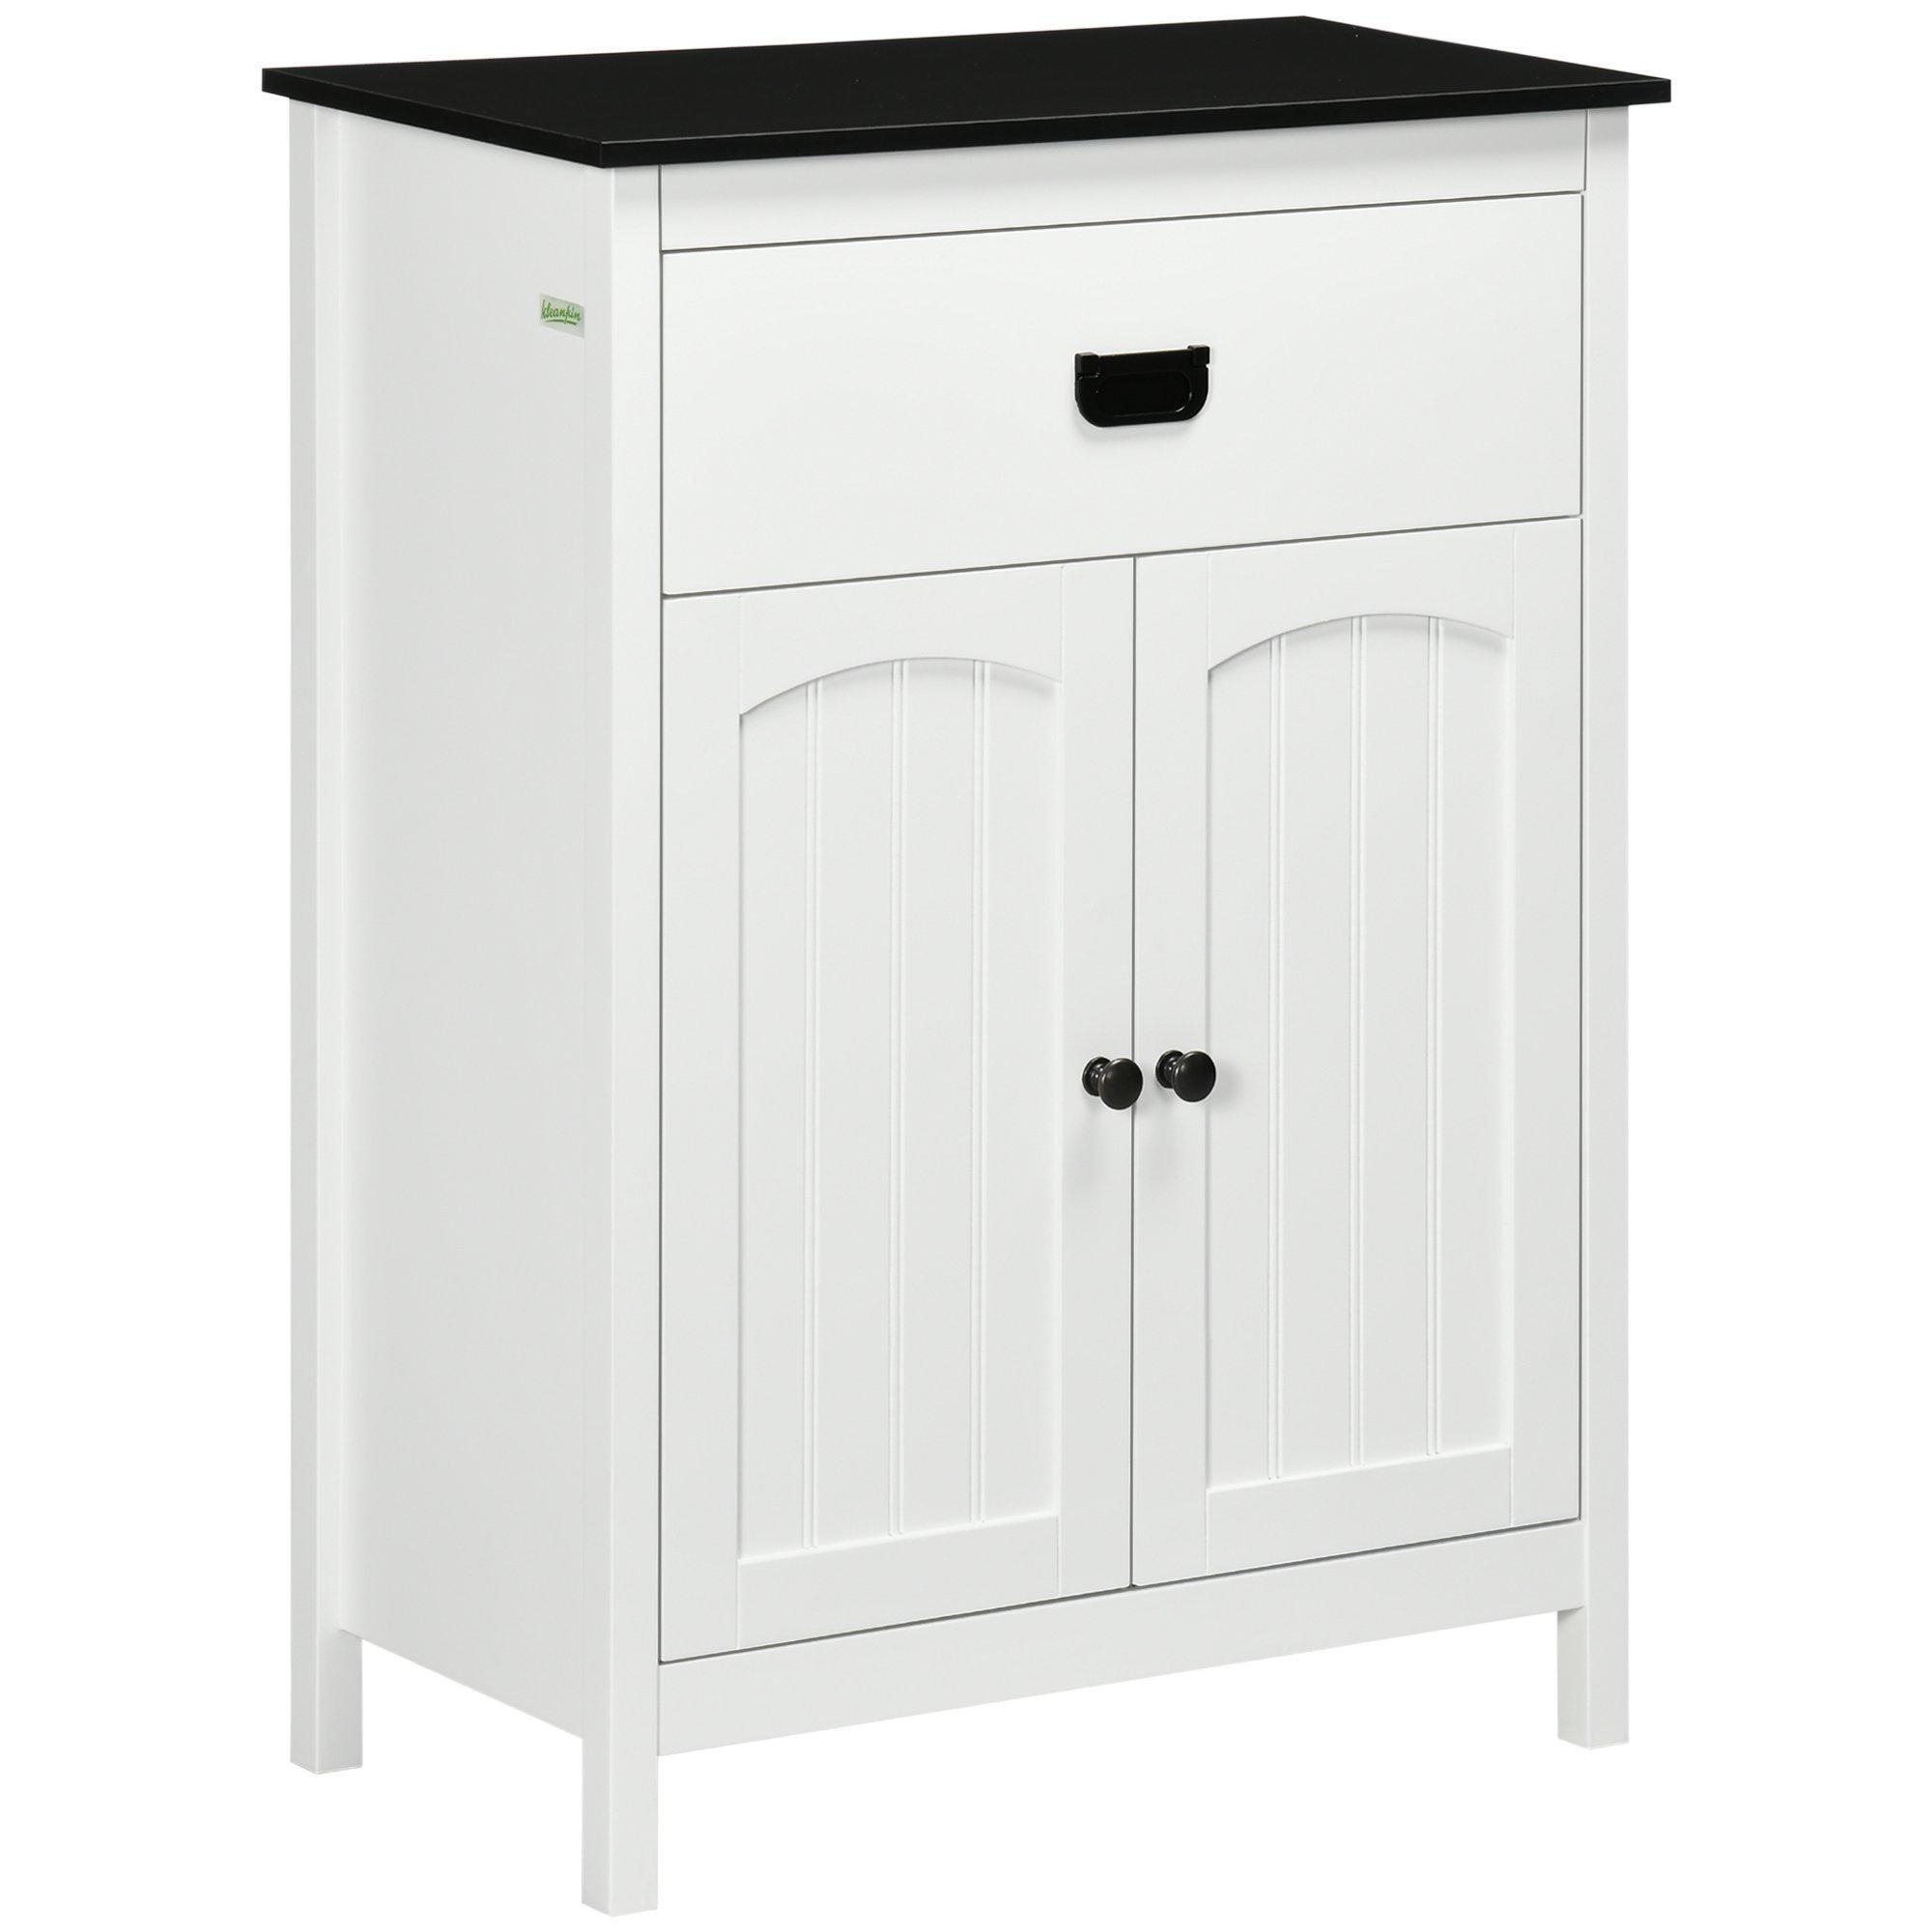 Bathroom Cabinet with Drawer Double Door Cabinet Adjustable Shelf - image 1